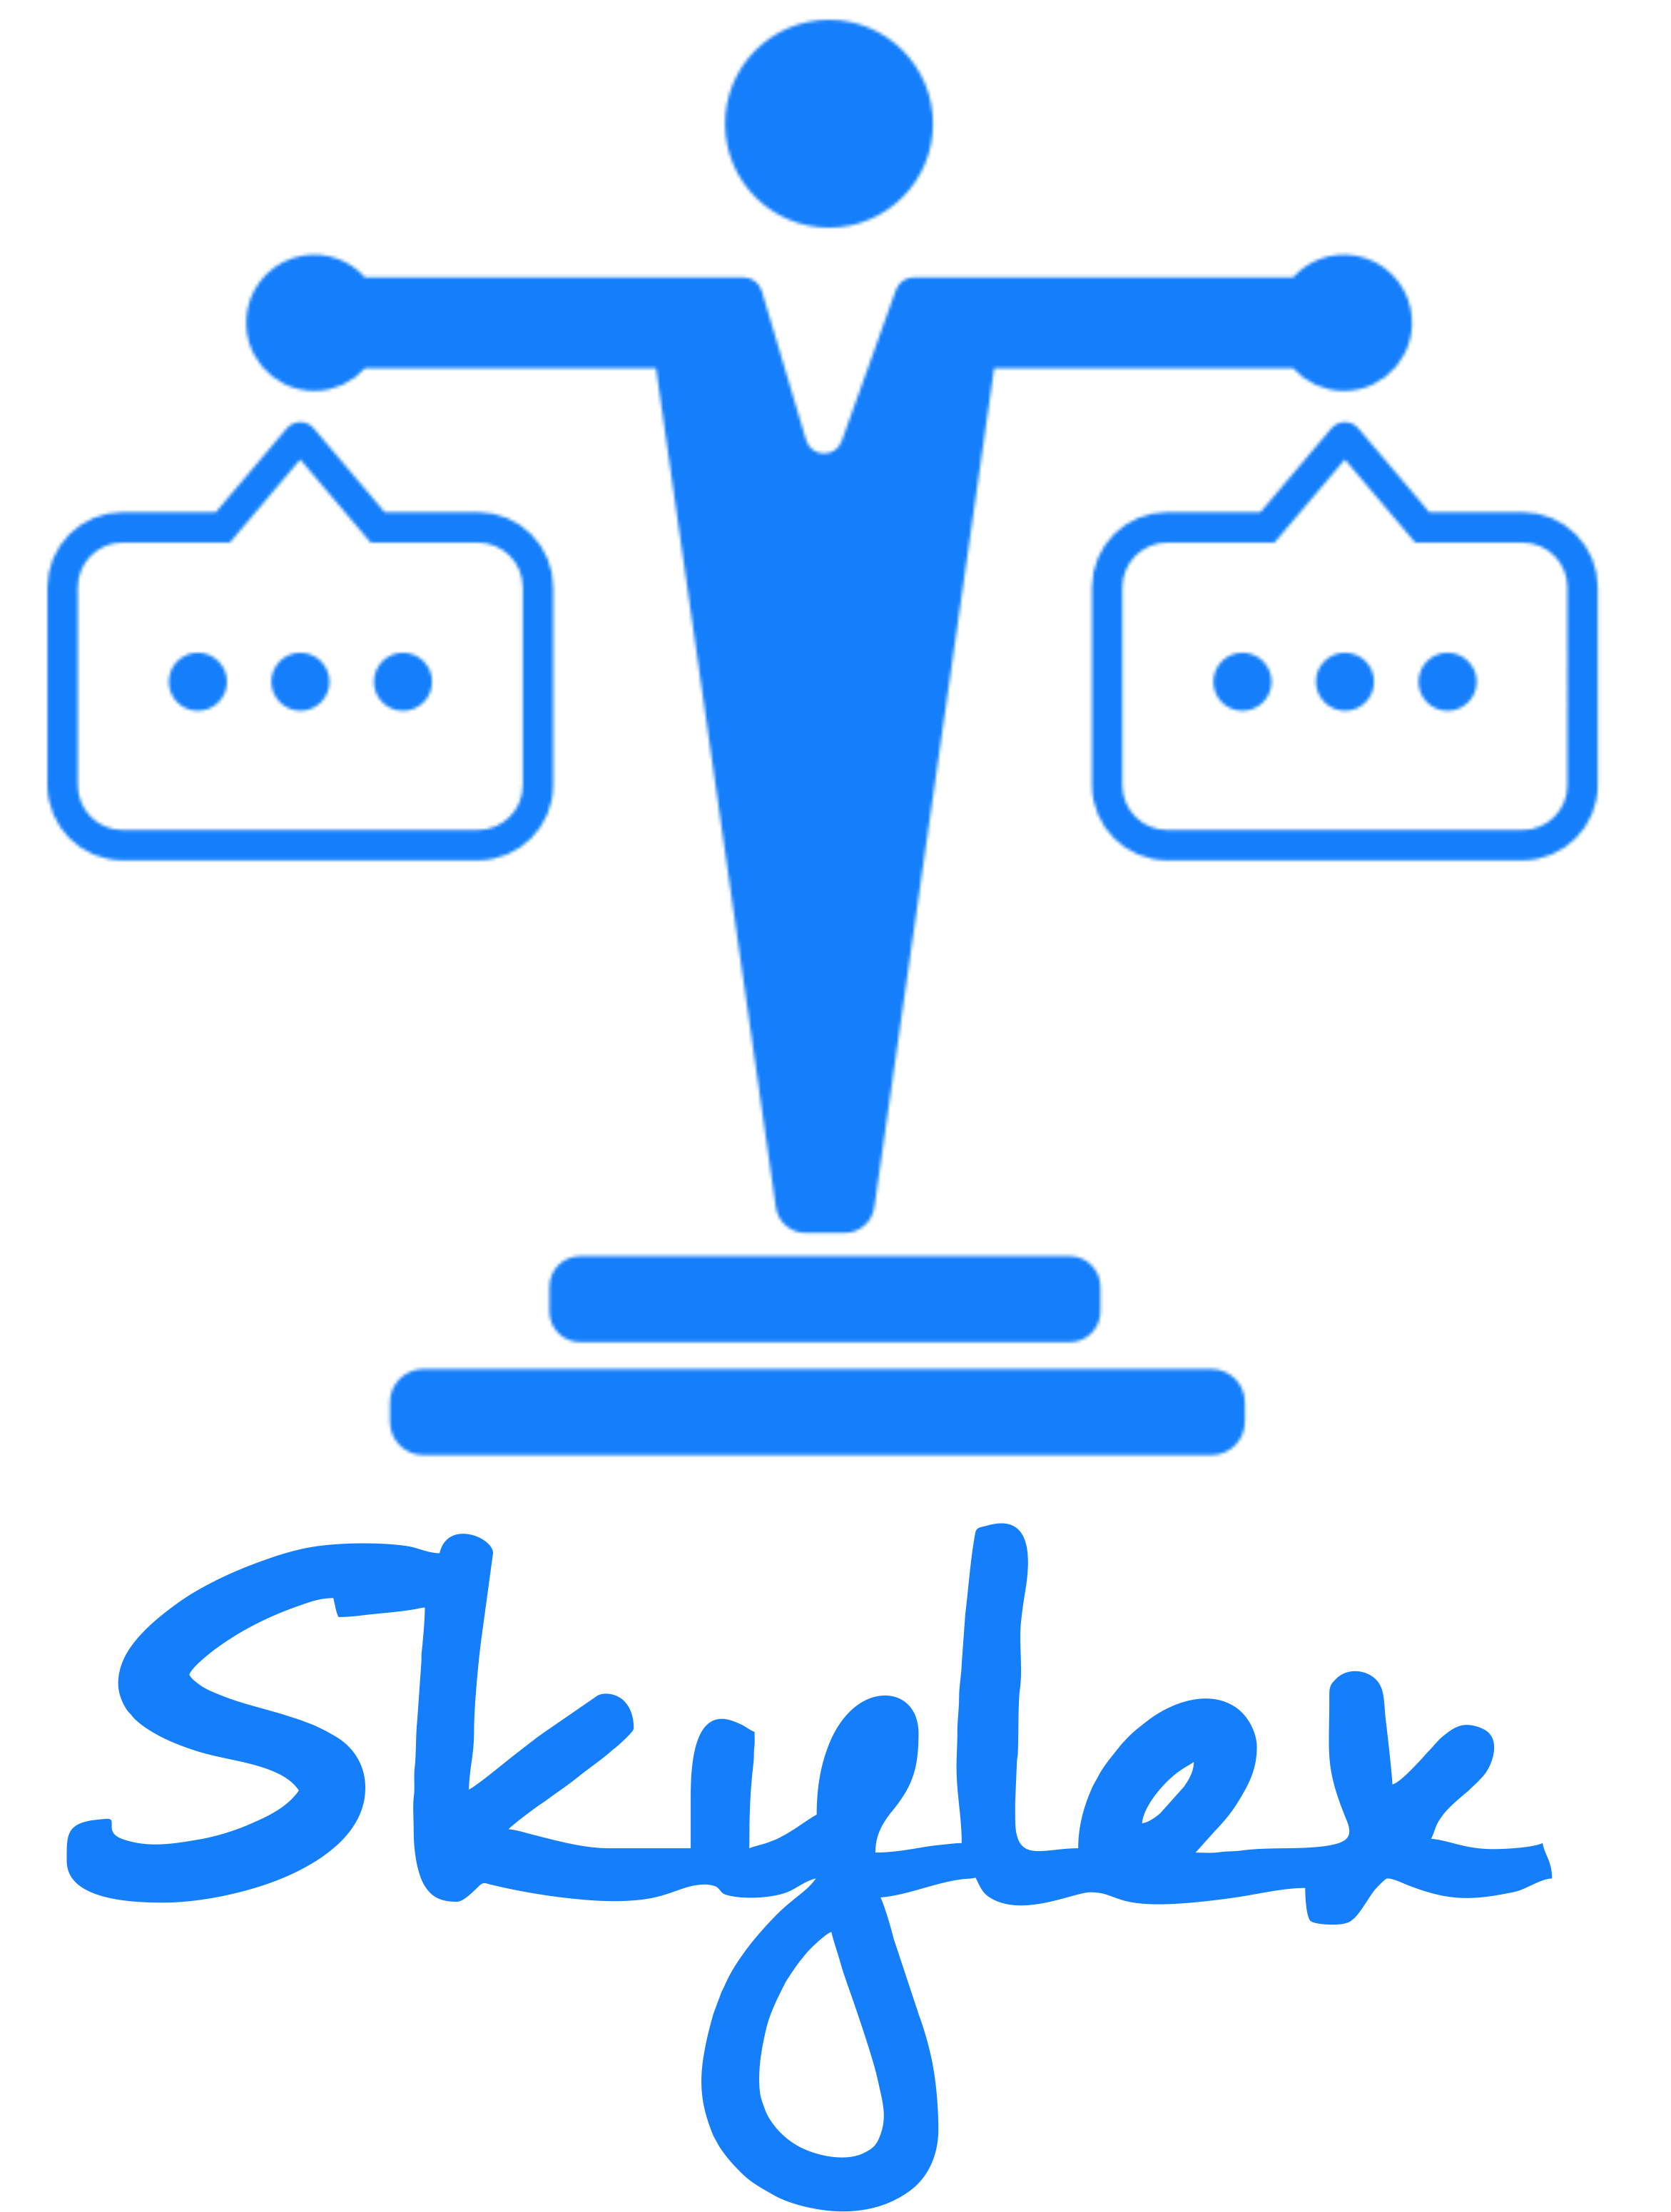 How to Use Skylex